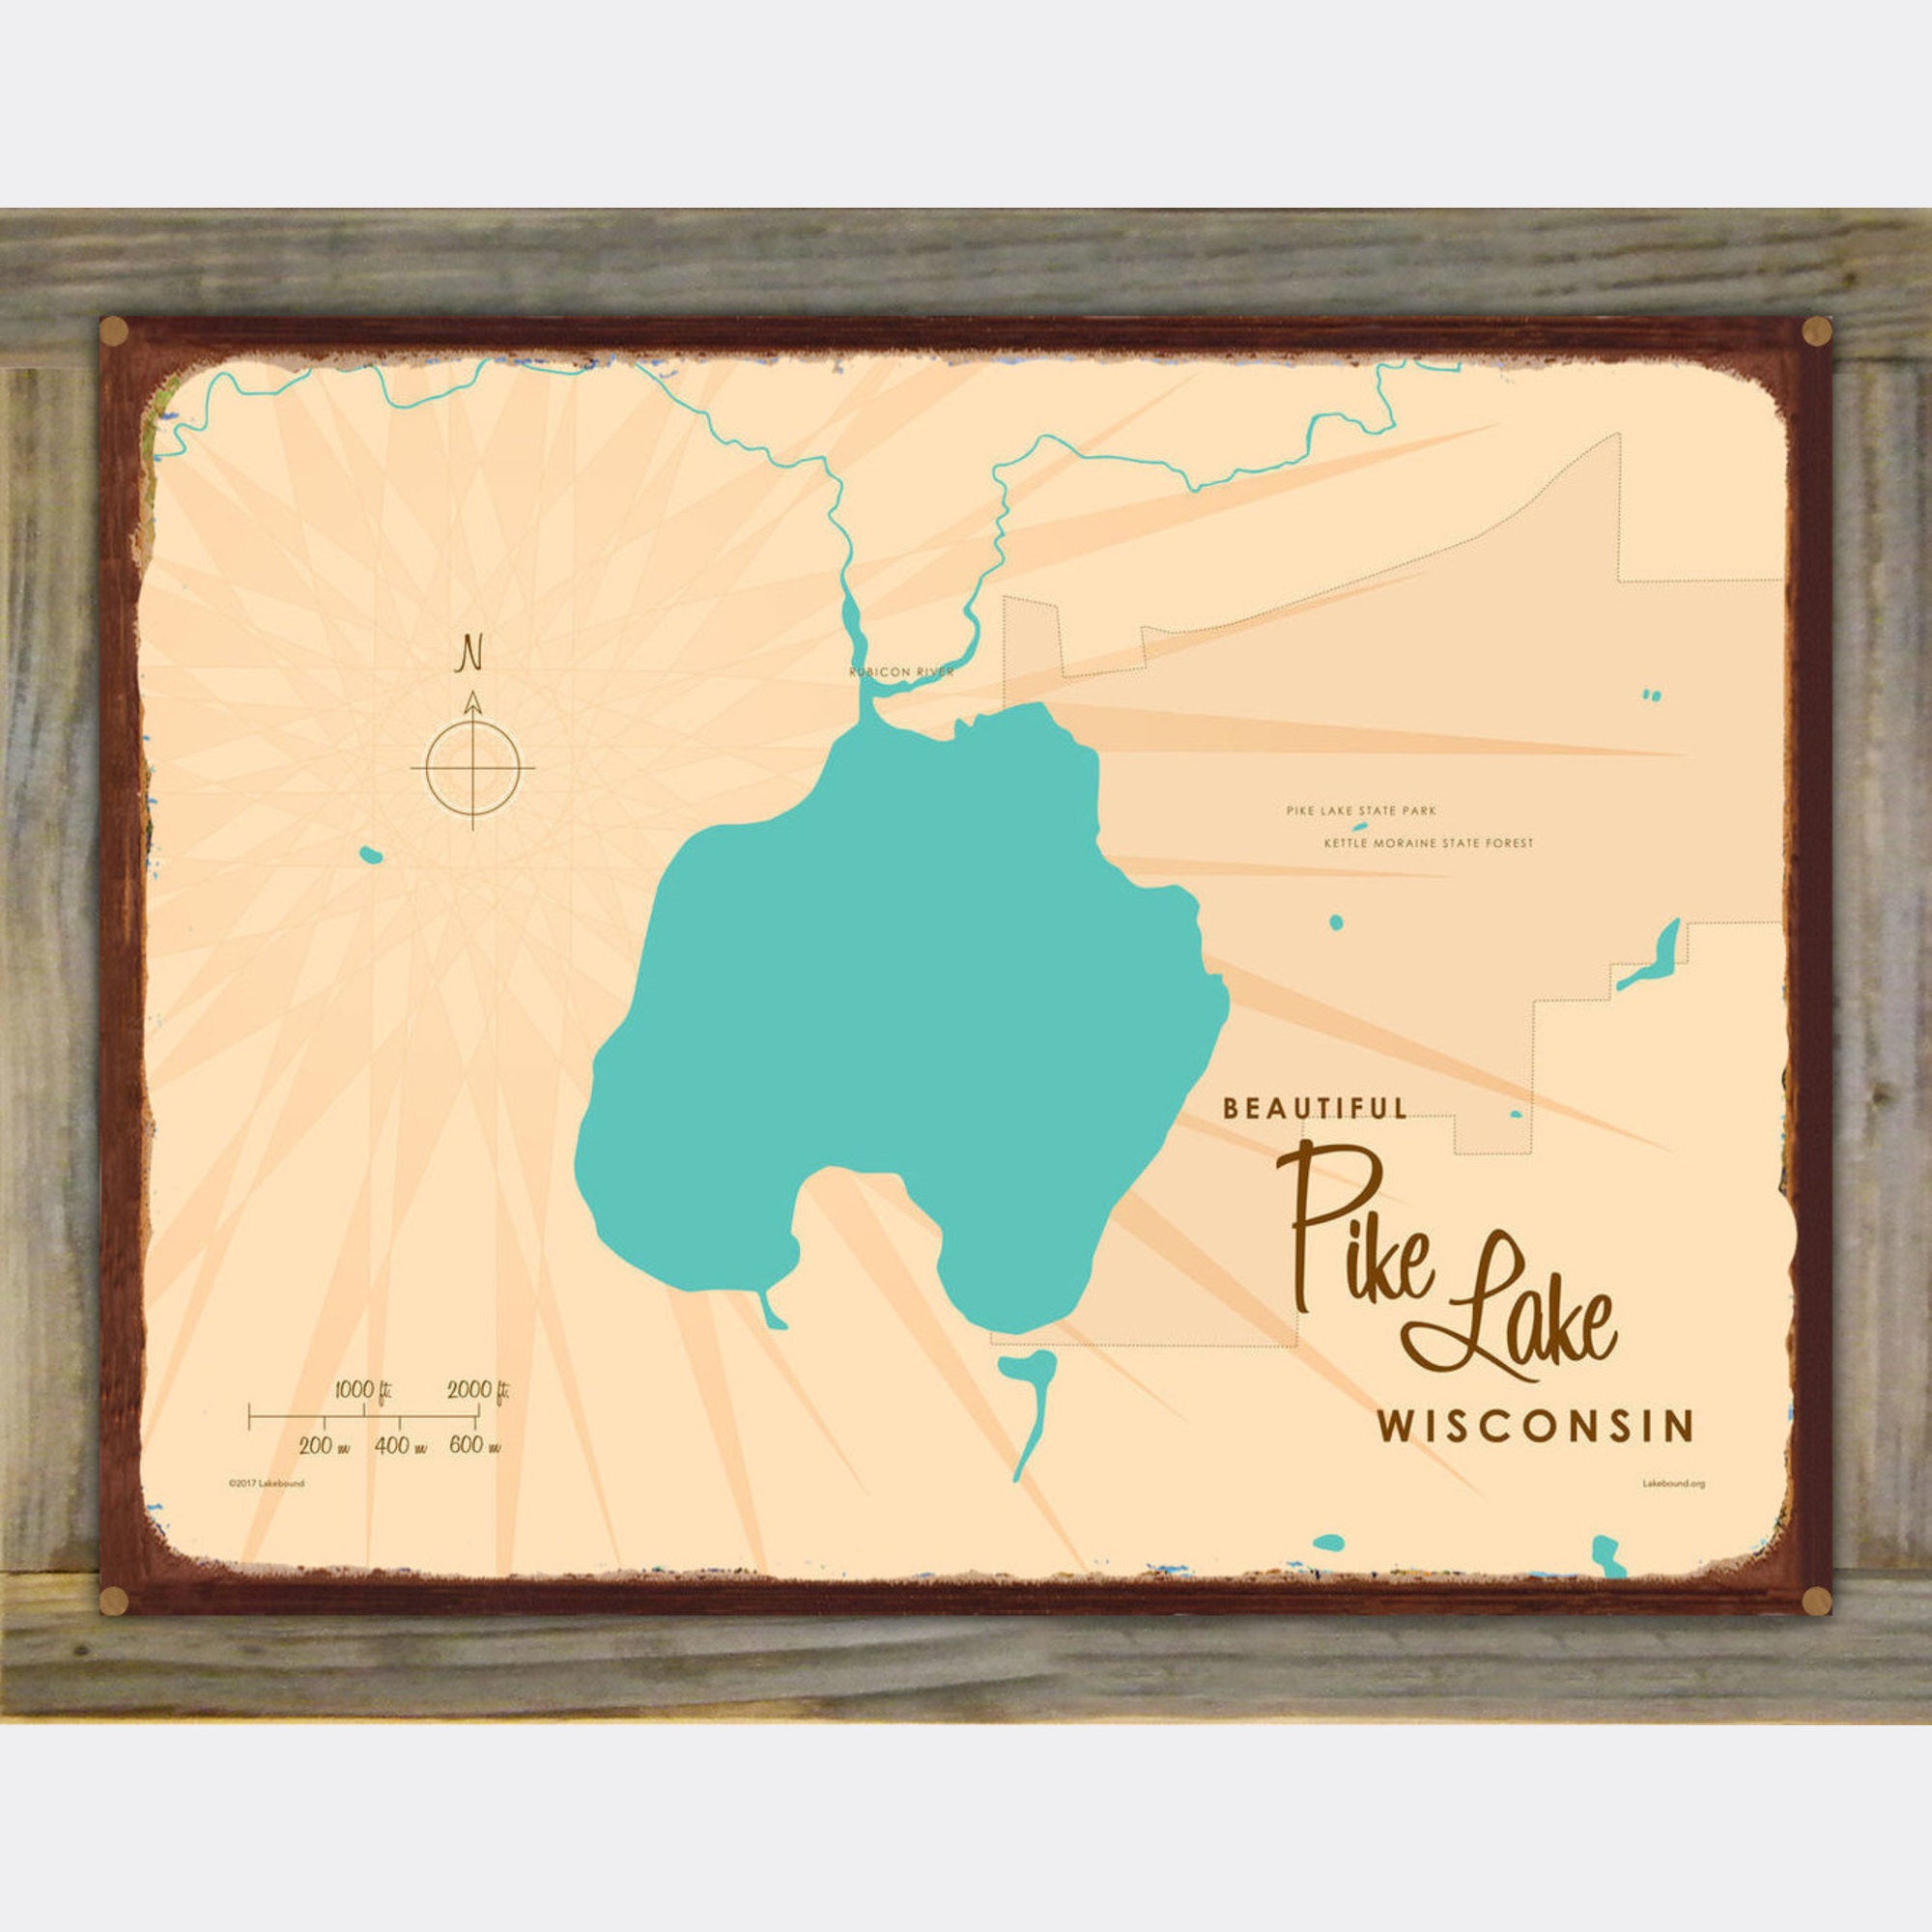 Pike Lake Wisconsin, Wood-Mounted Rustic Metal Sign Map Art